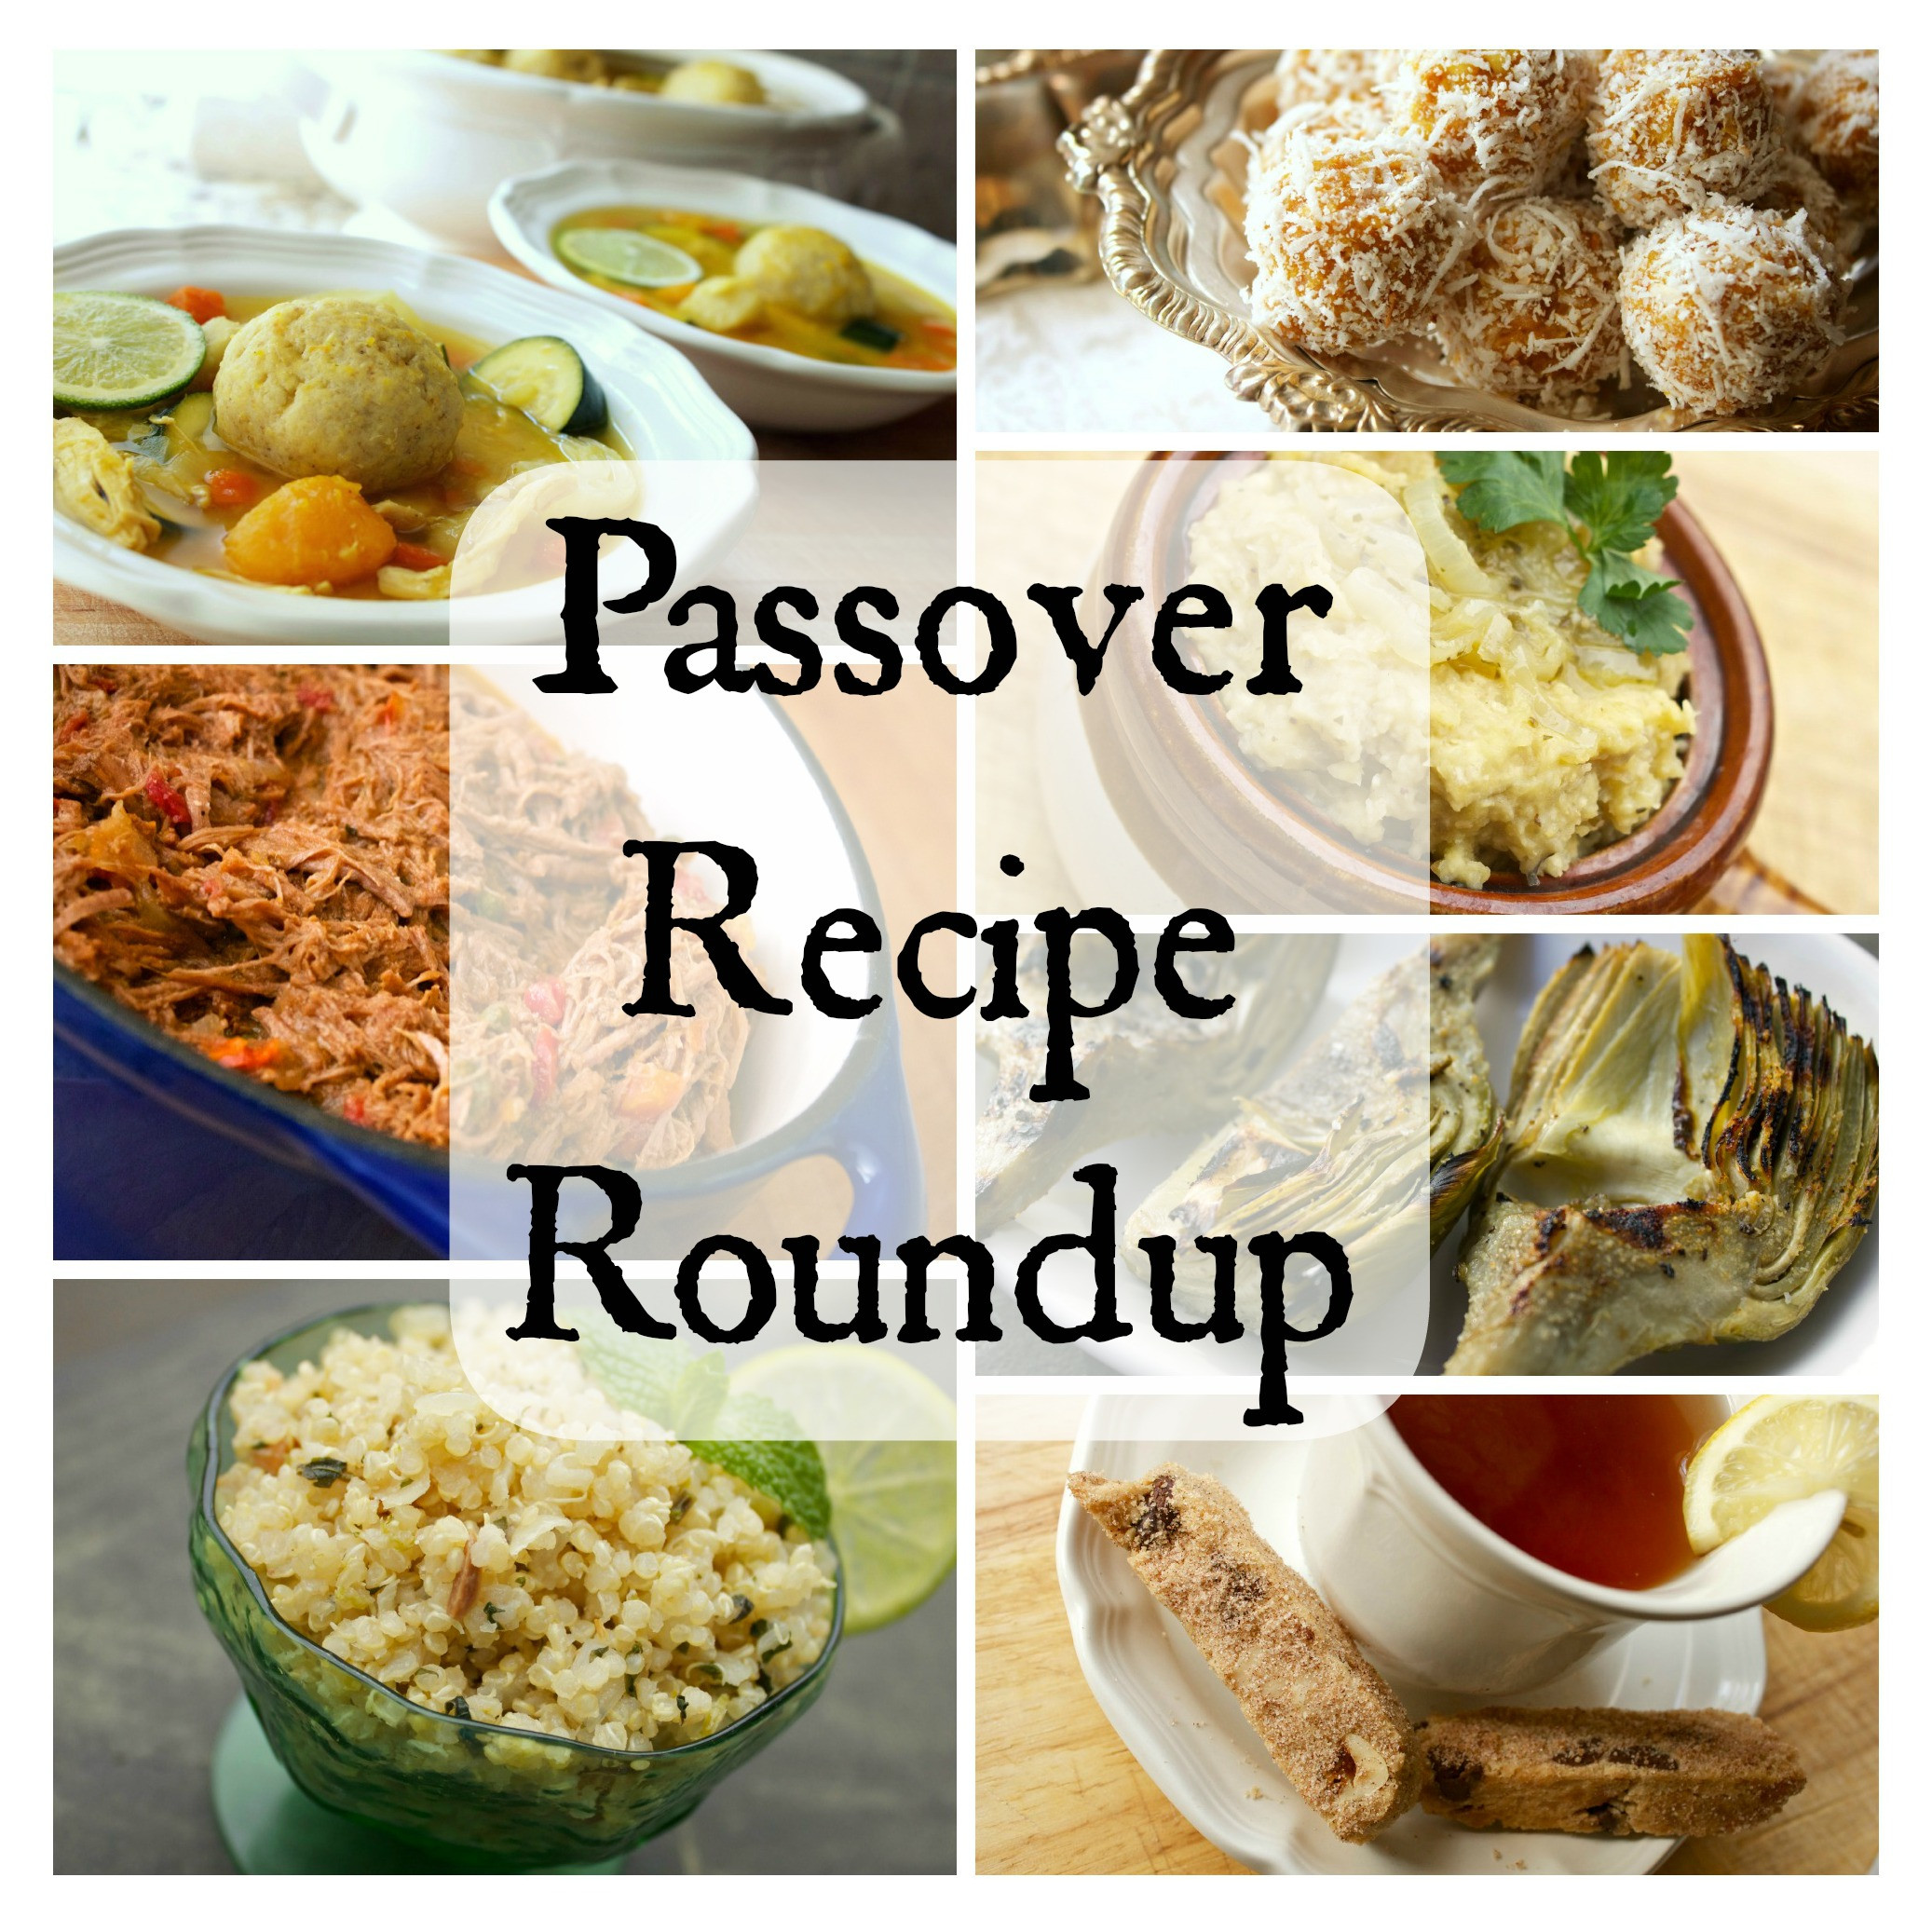 Passover Seder Recipe
 Passover Seder – The Cuban Reuben